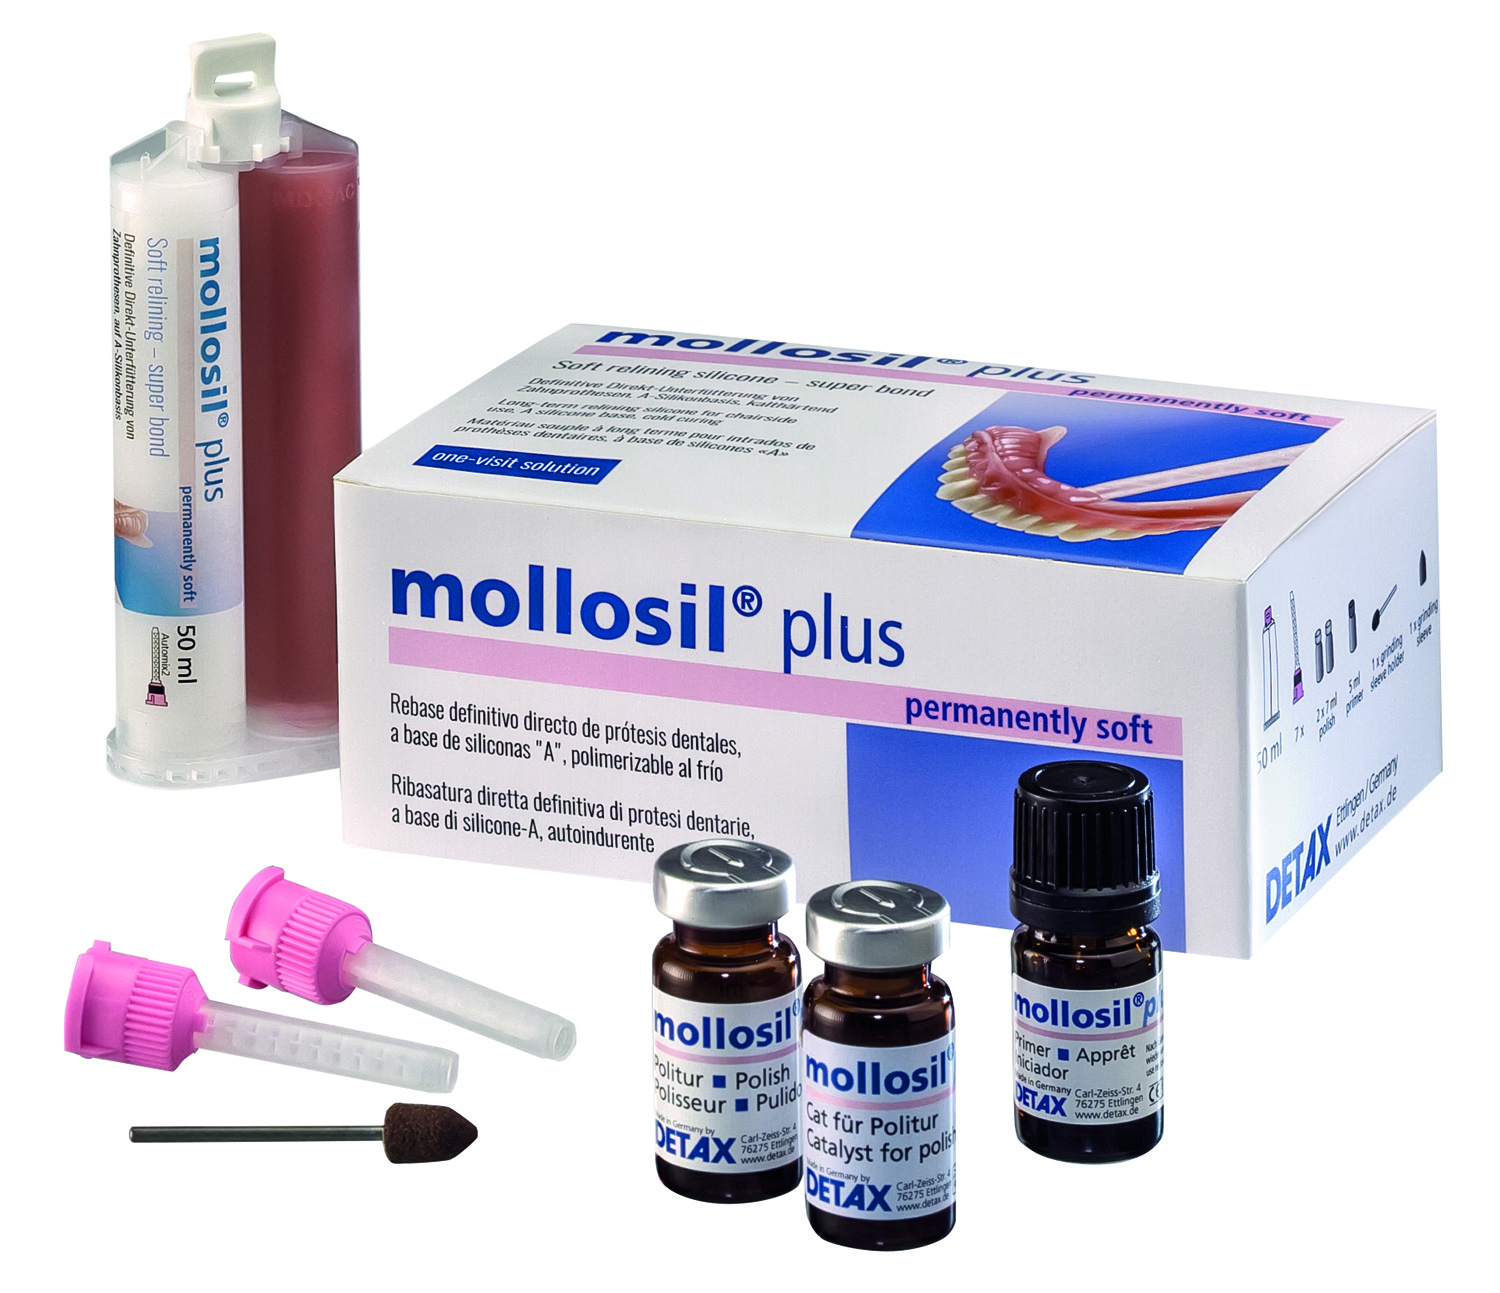 Mollosil Plus Kit Detax